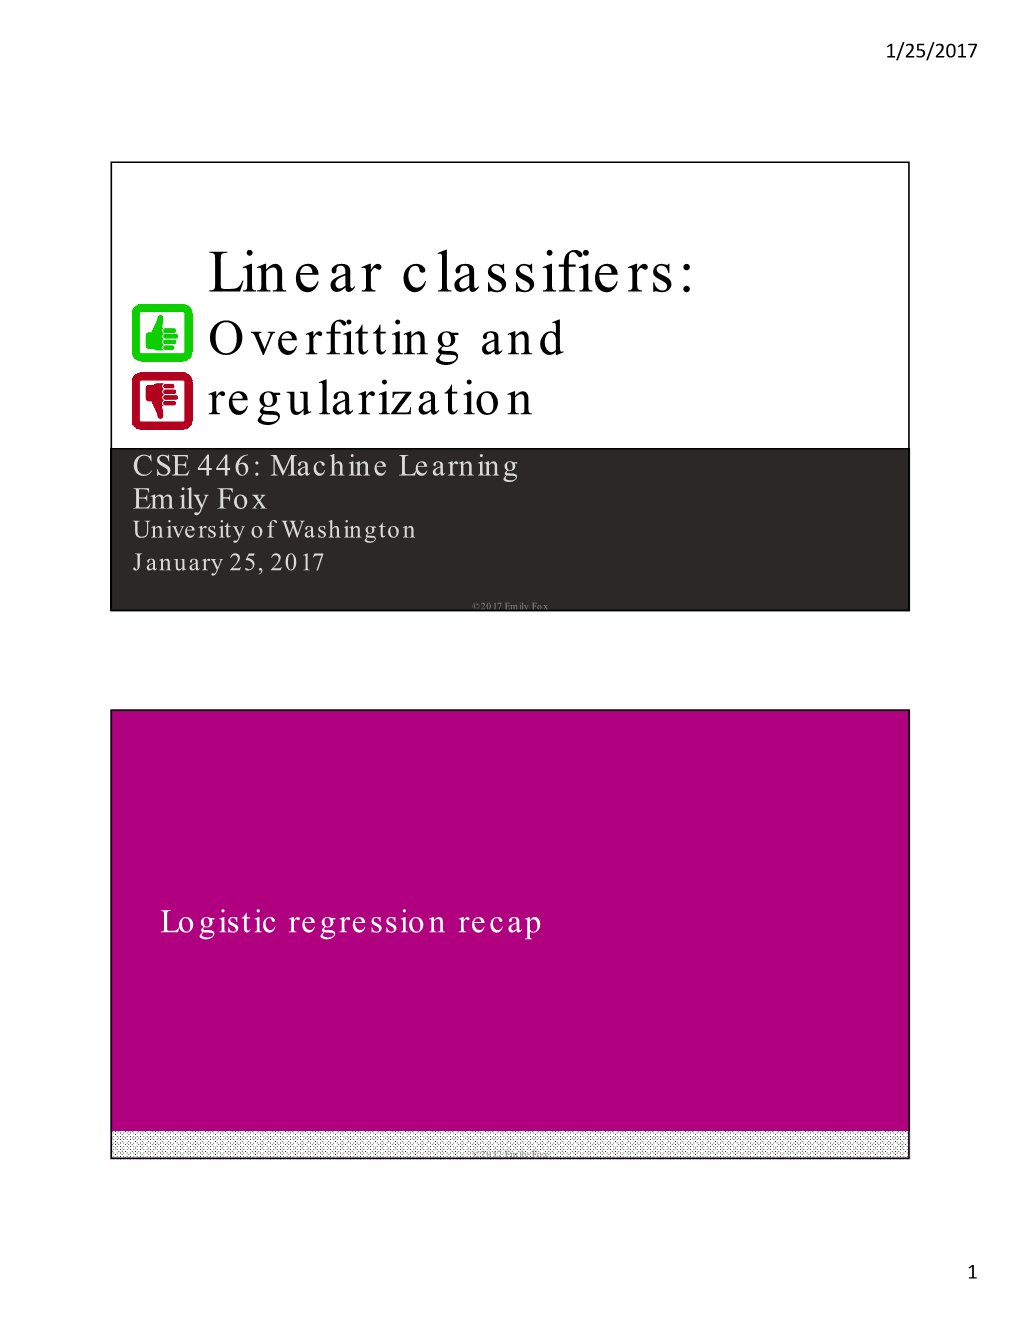 Linear Classifiers: Overfitting and Regularization CSE 446: Machine Learning Emily Fox University of Washington January 25, 2017